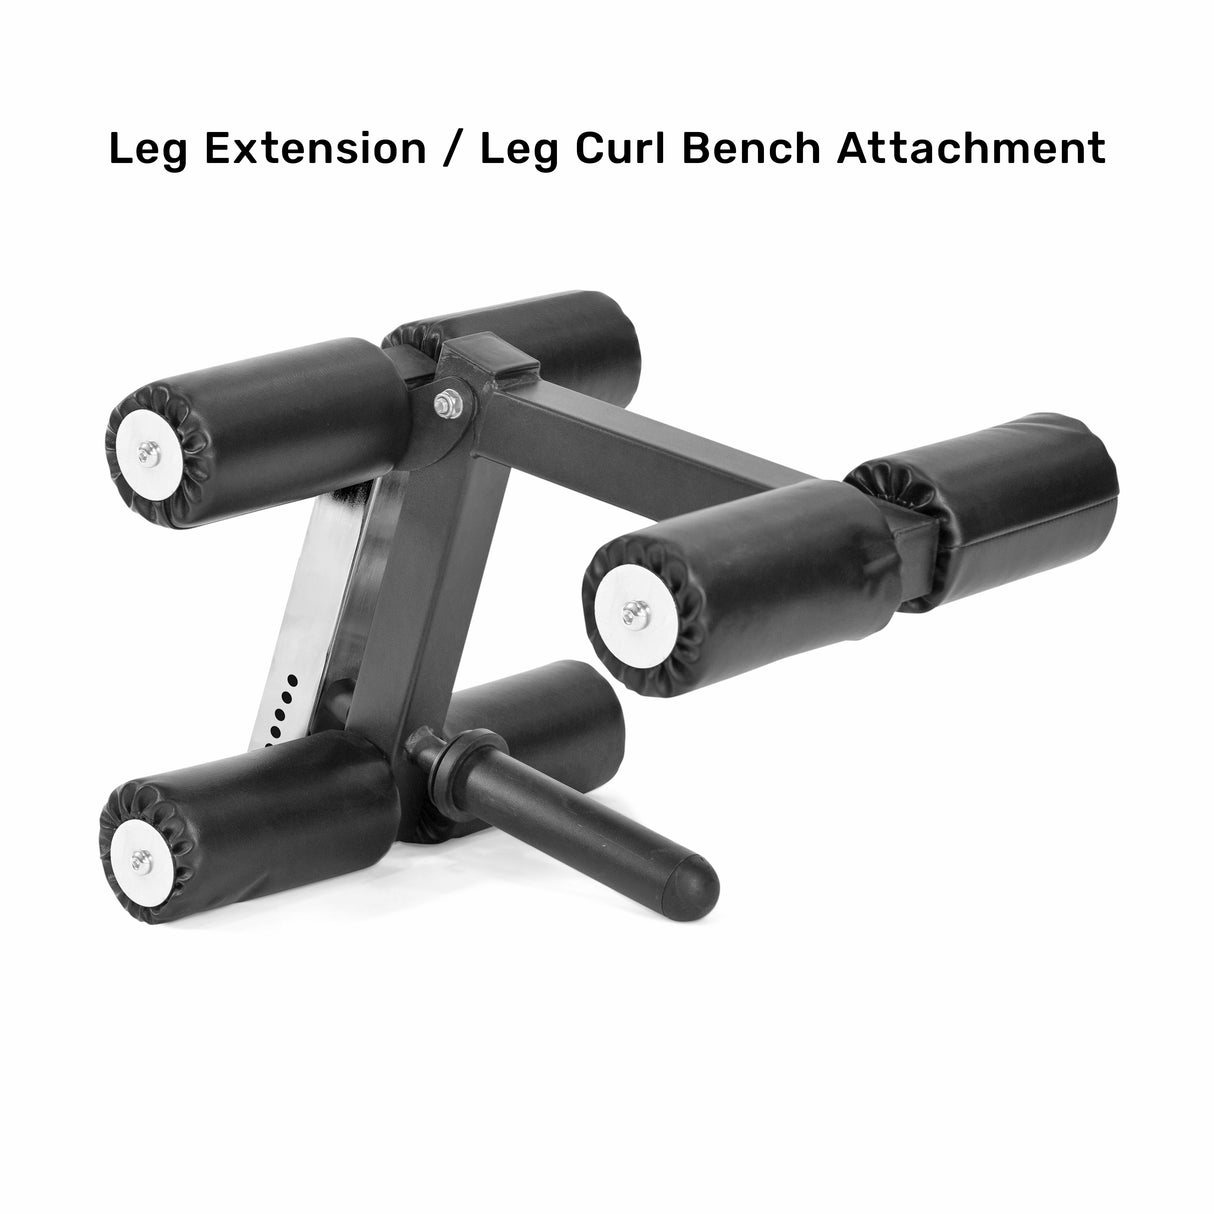 Leg Extension / Leg Curl Bench Attachment